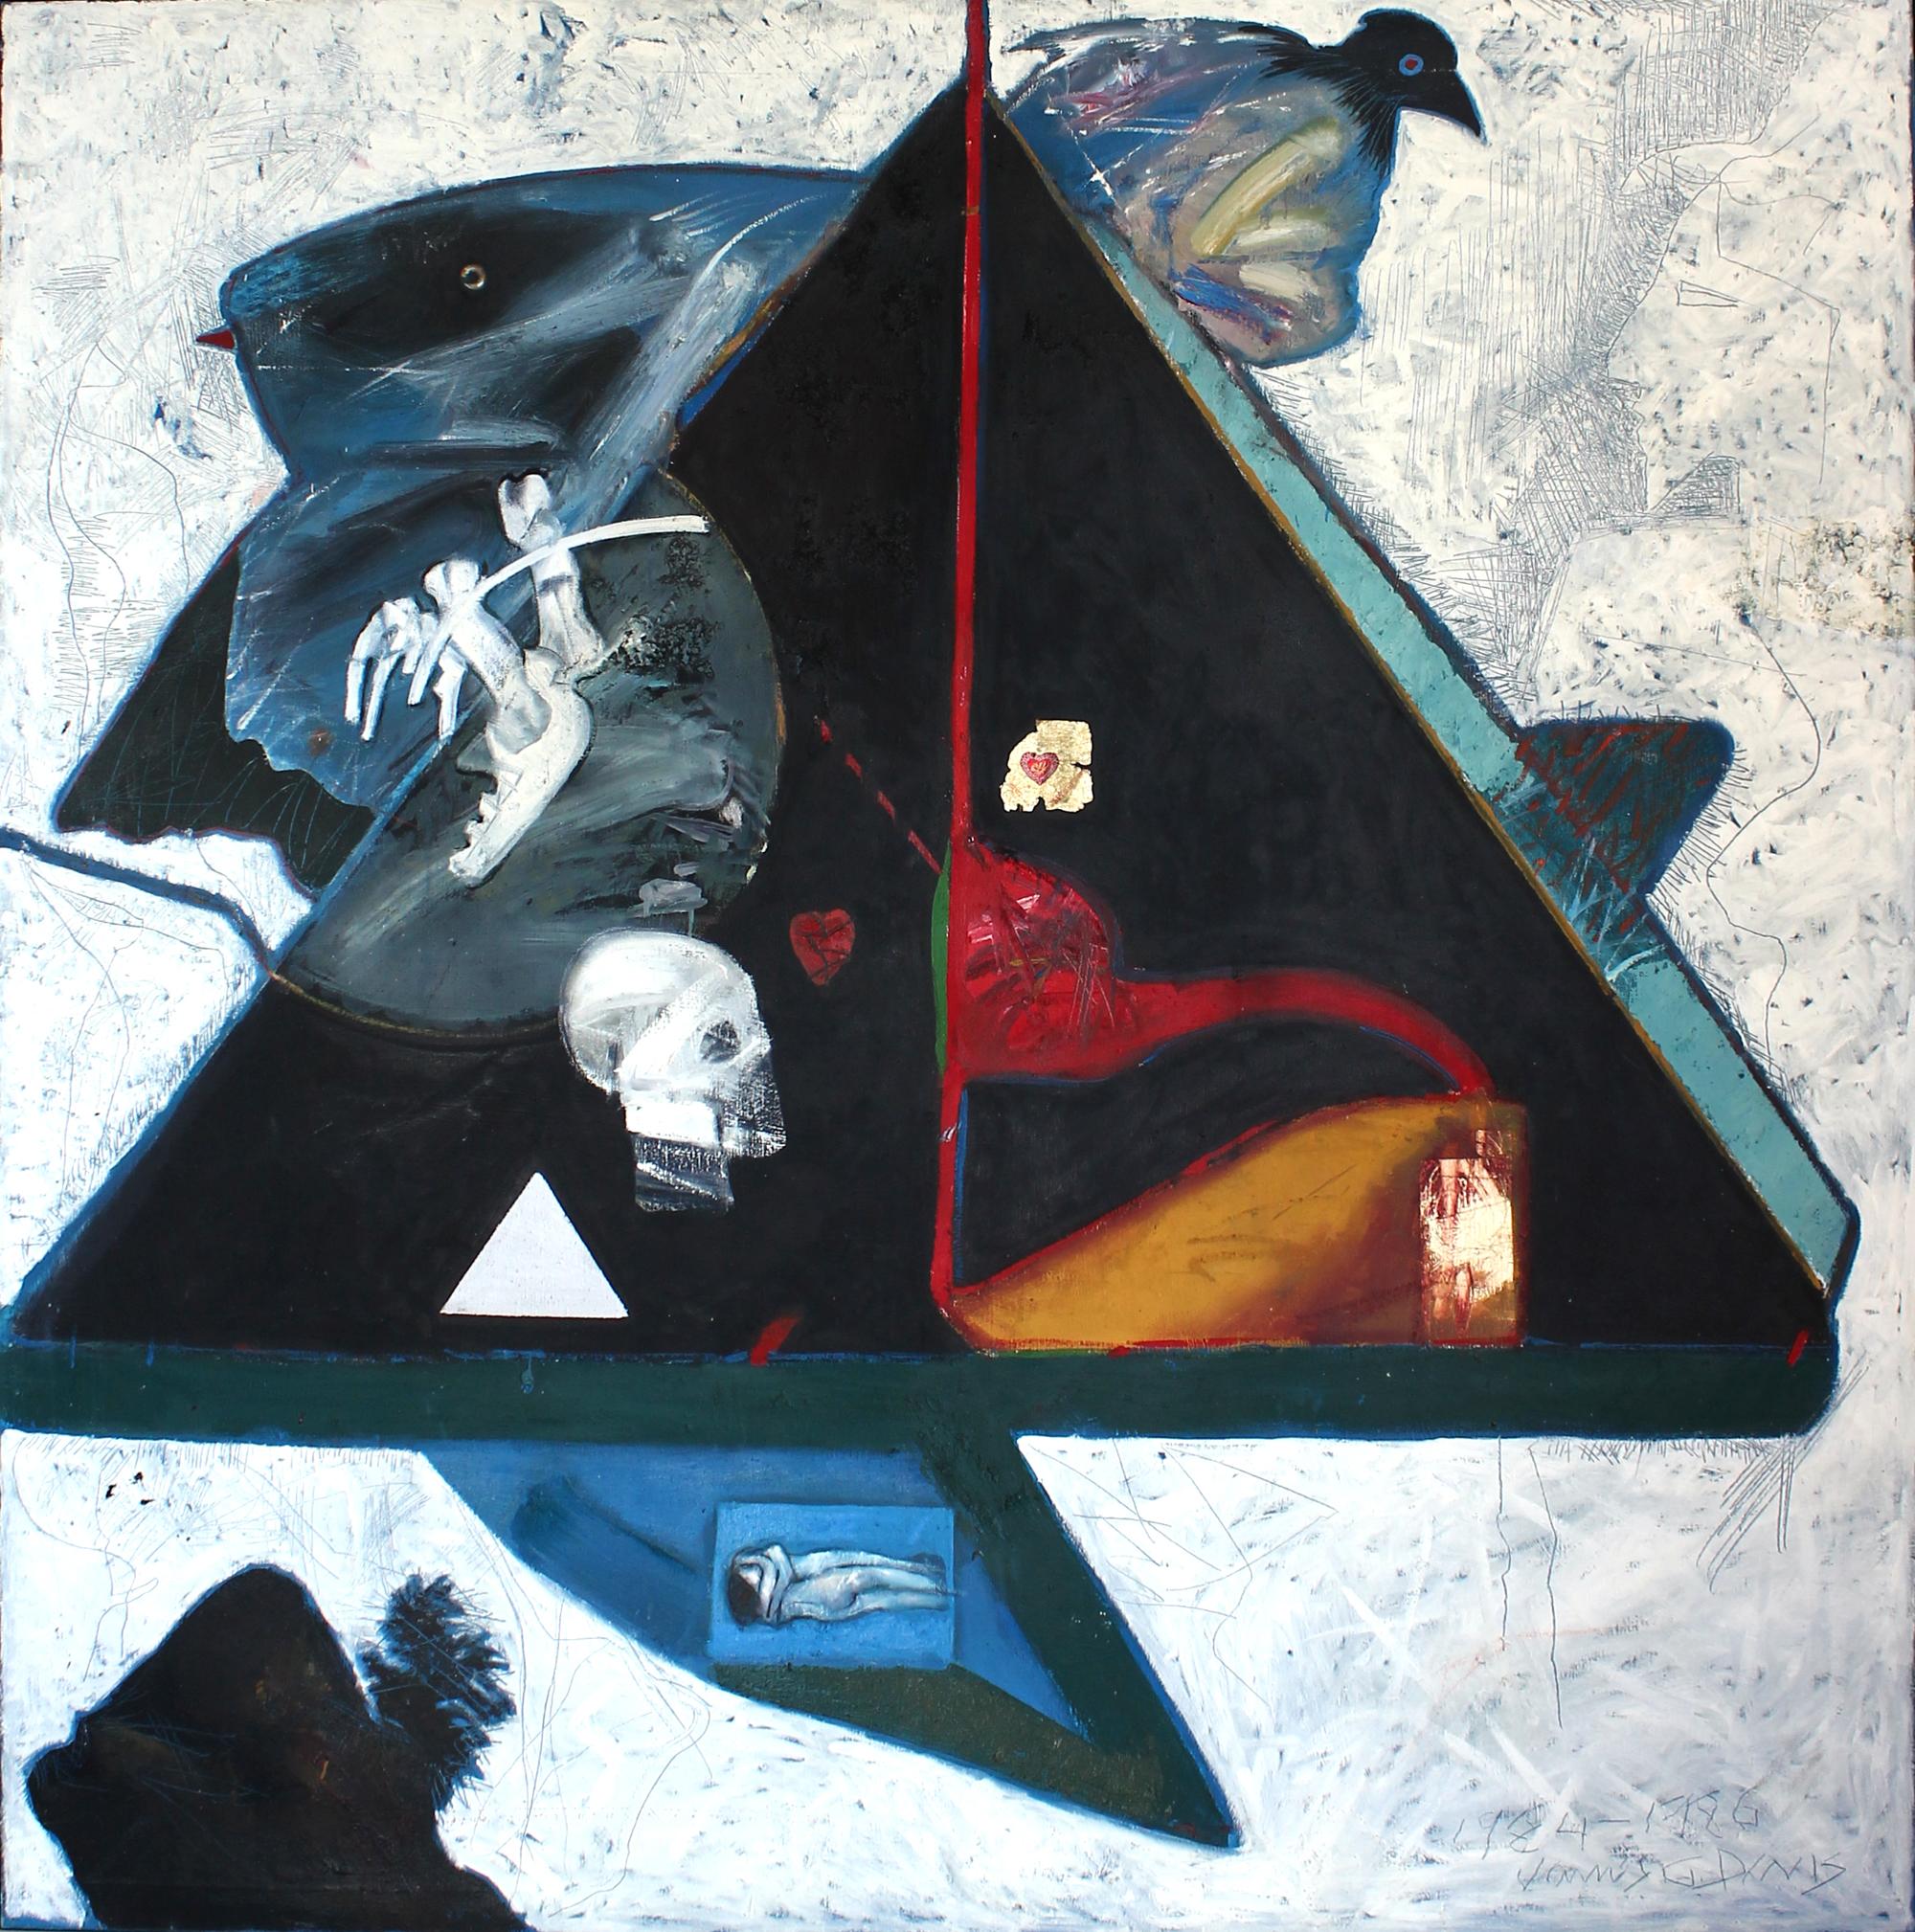 James Davis Figurative Painting - Black Pyramid, figurative oil painting on canvas